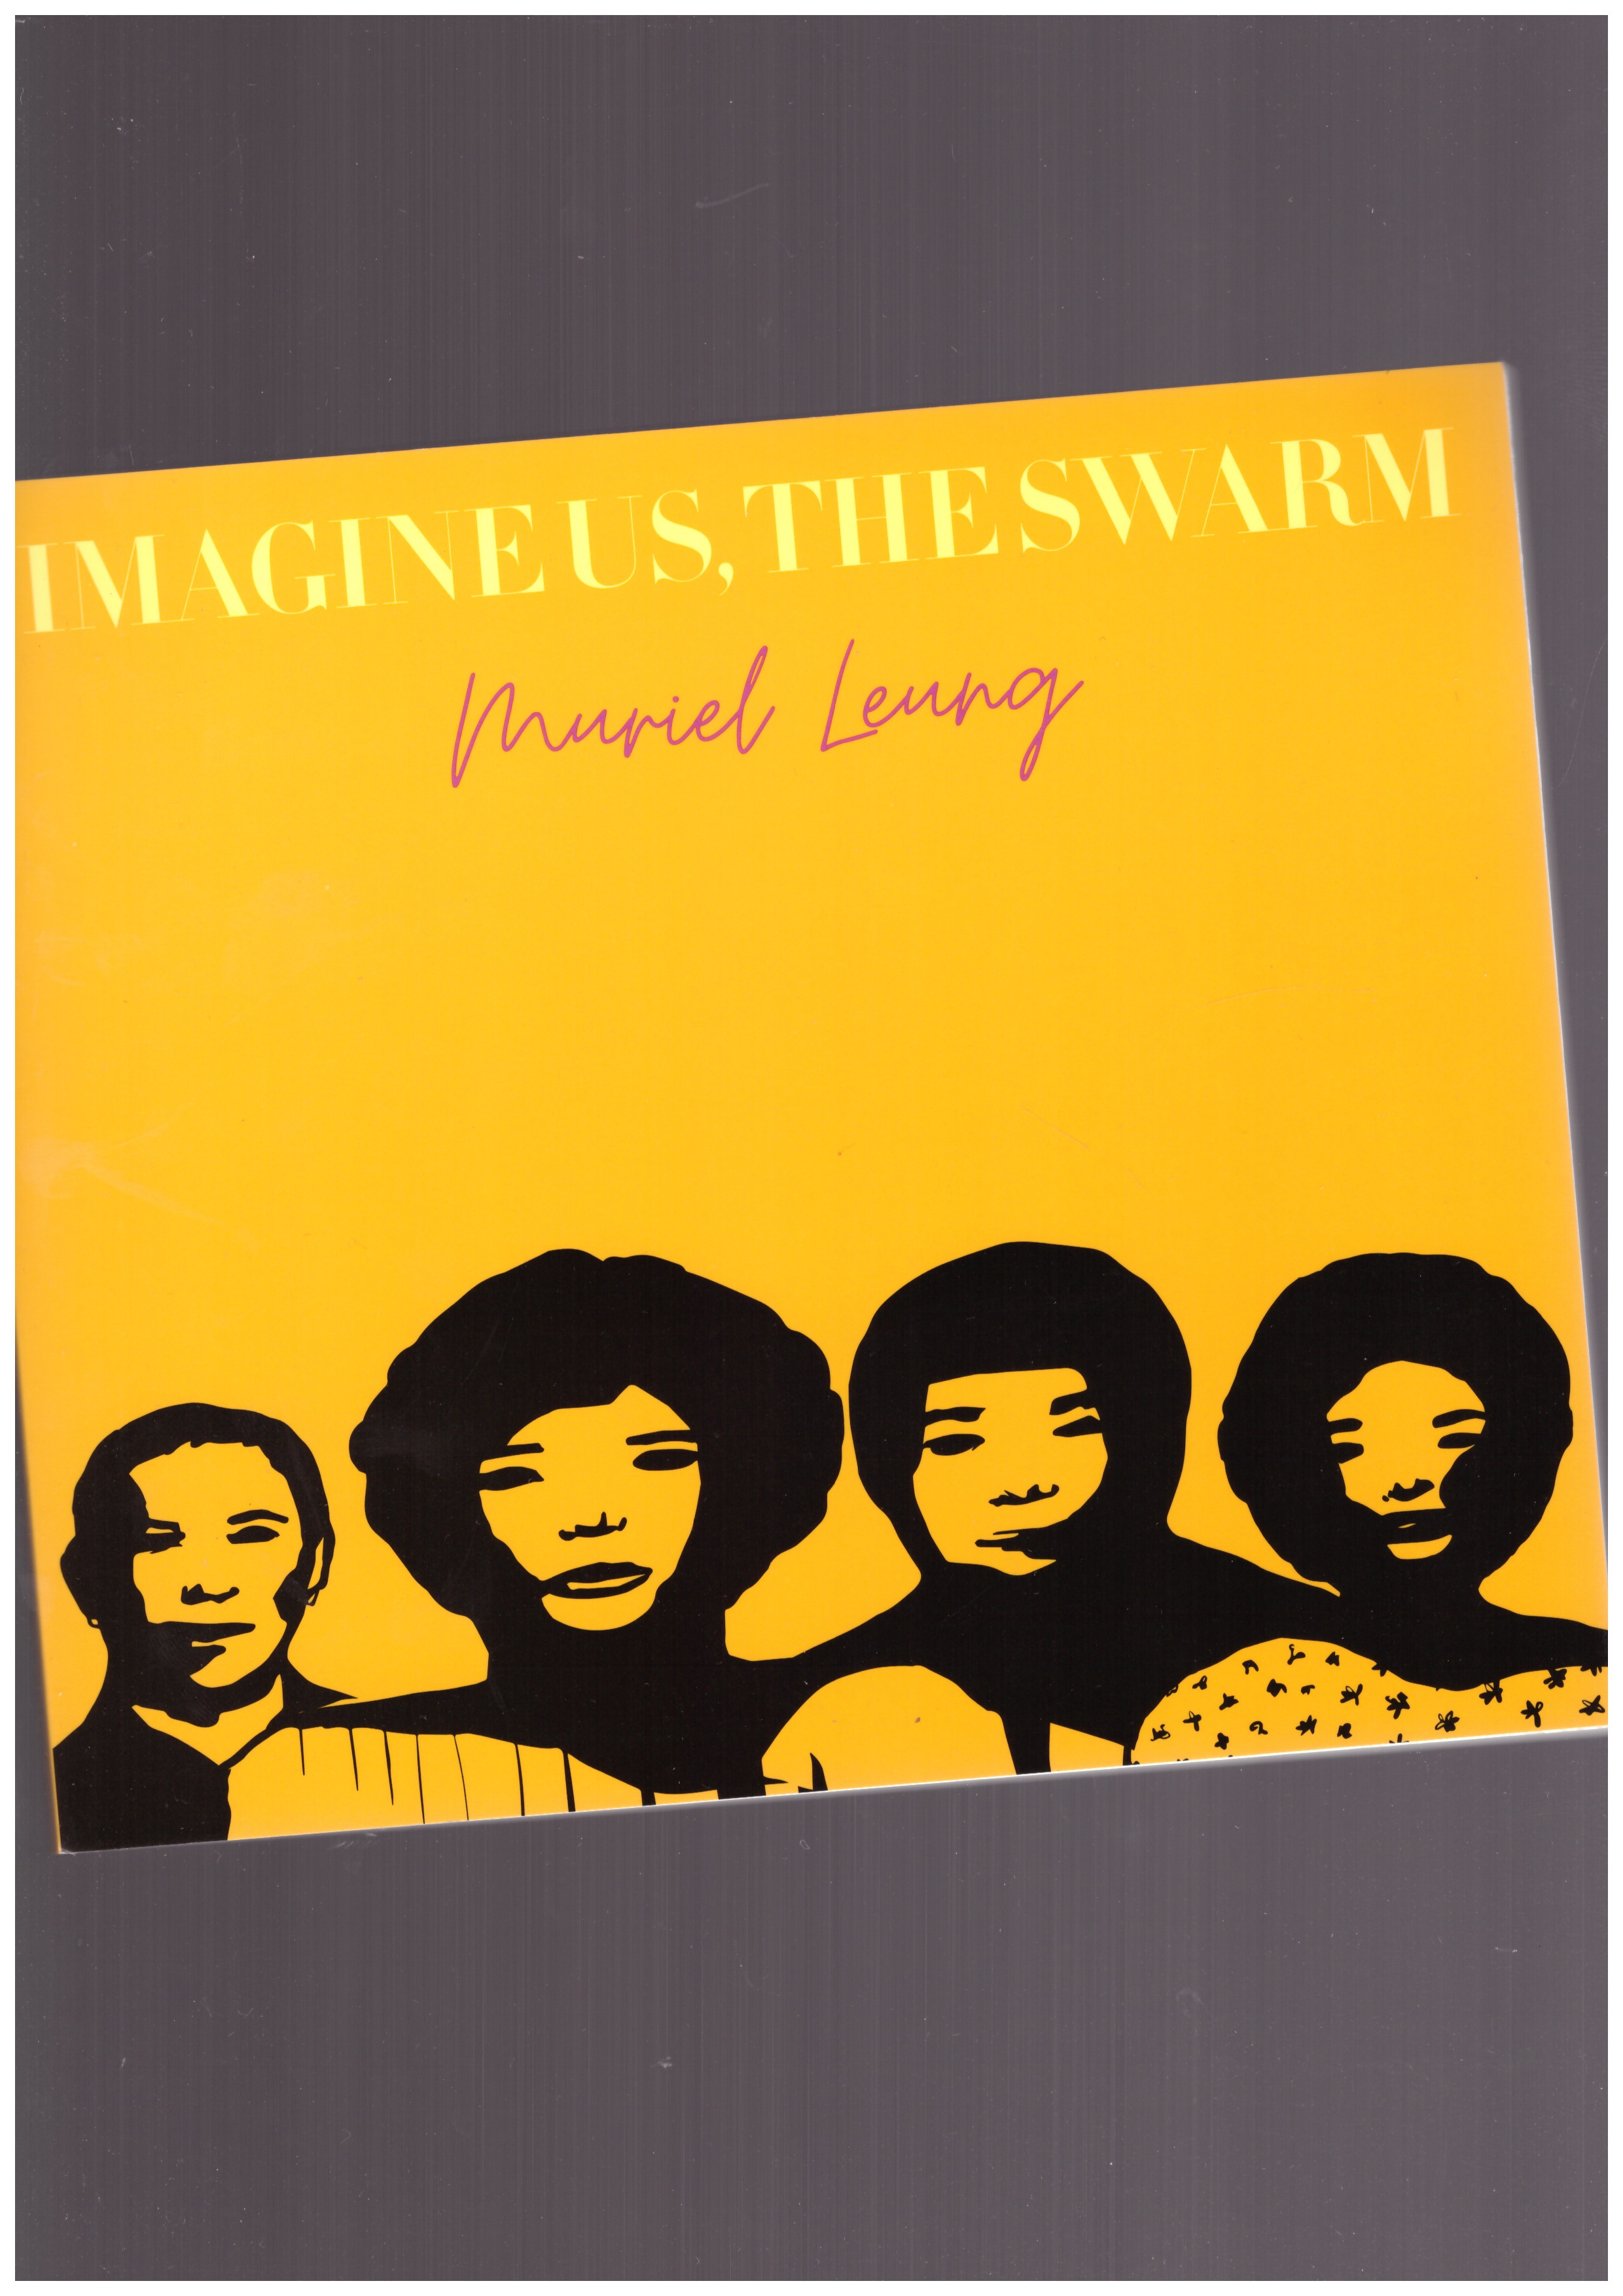 LEUNG, Muriel - Imagine Us, The Swarm